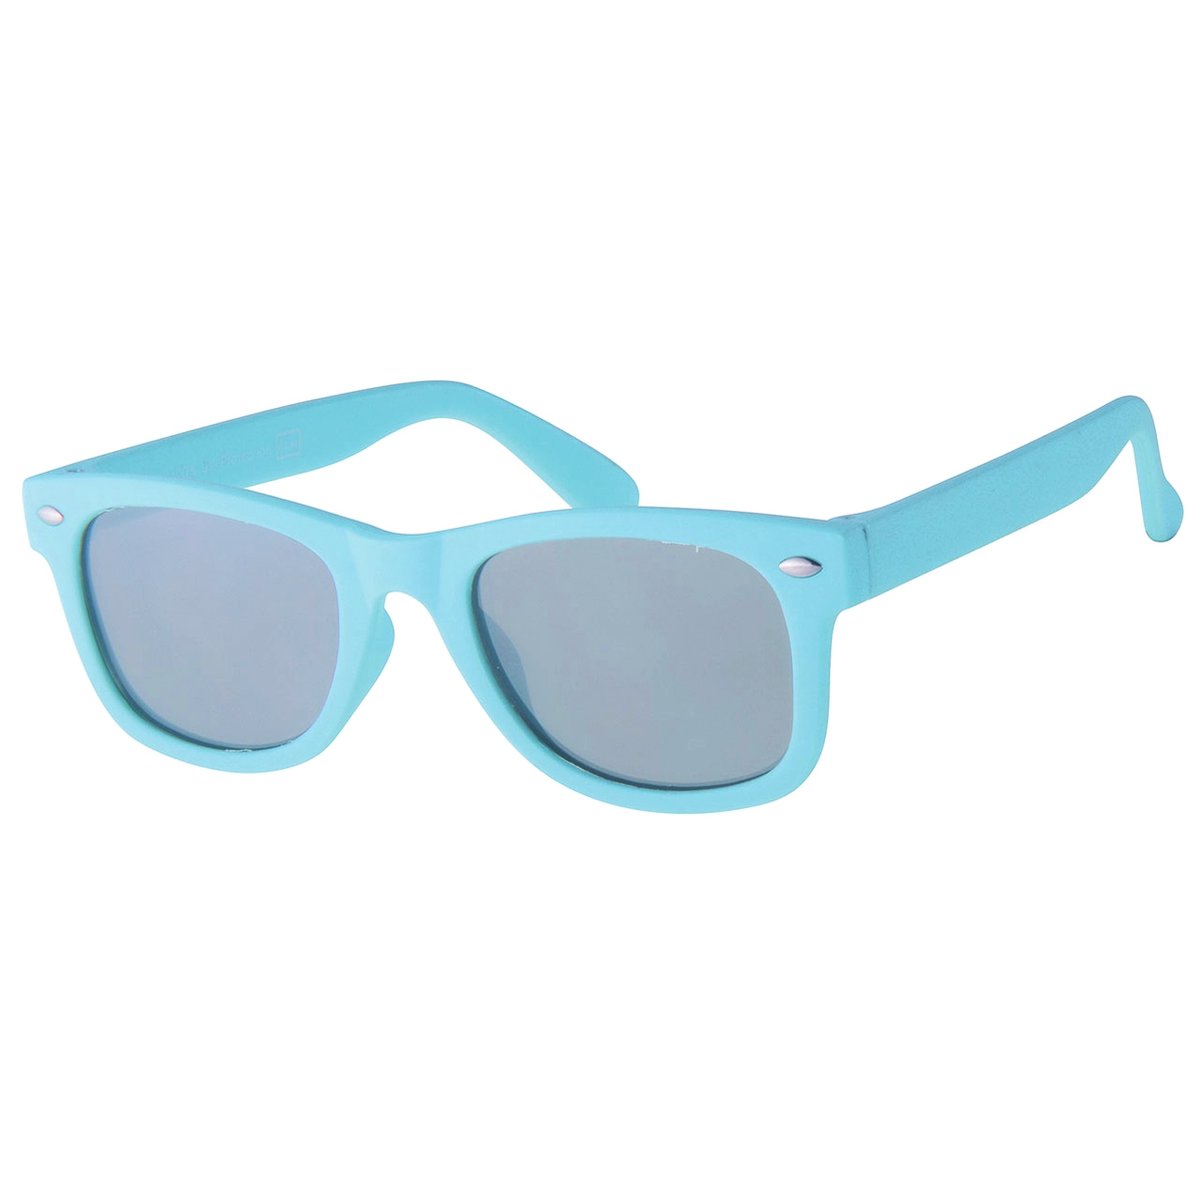 Kinderzonnebril 0 – 4 jaar Beau Blue + GRATIS Blauw Gekleurde Hoes! Jongens Meisjes Bril Kinderbril